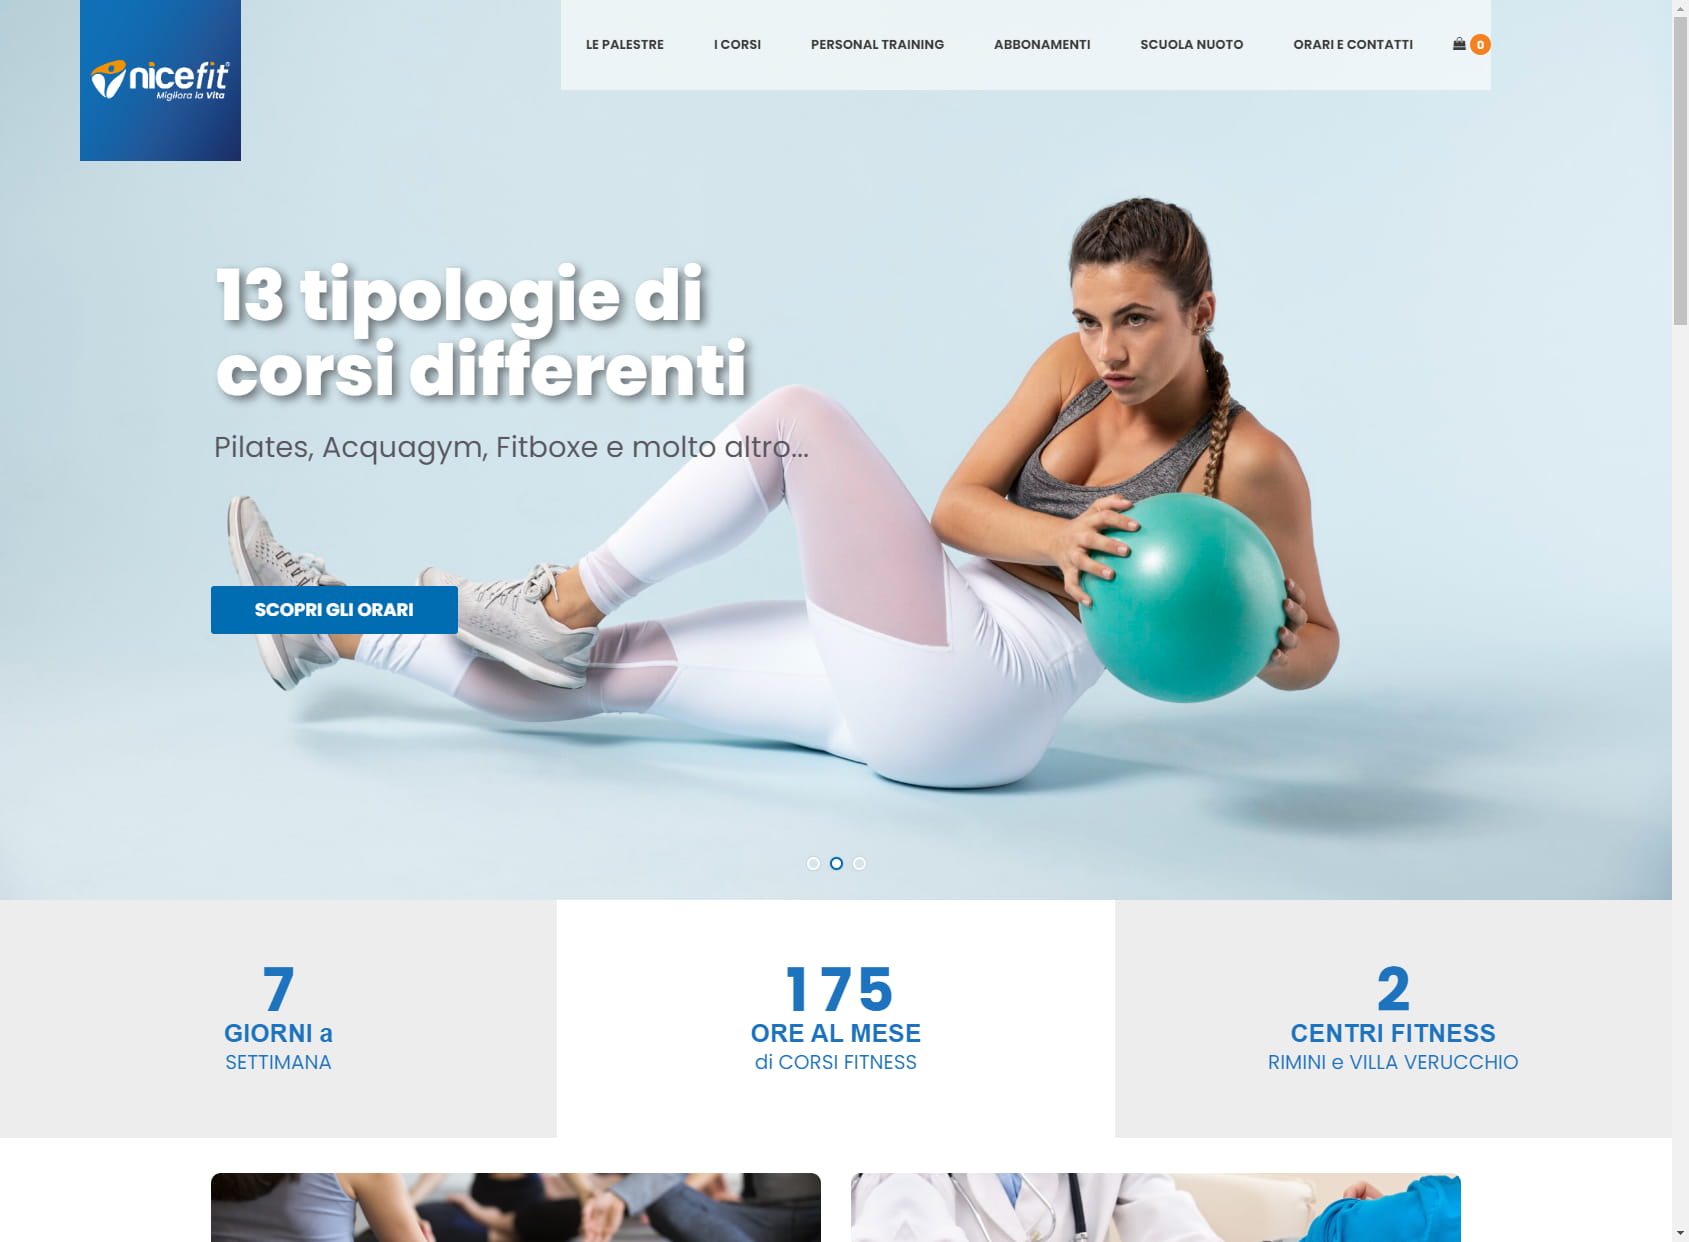 NiceFit - Fitness Center Rimini